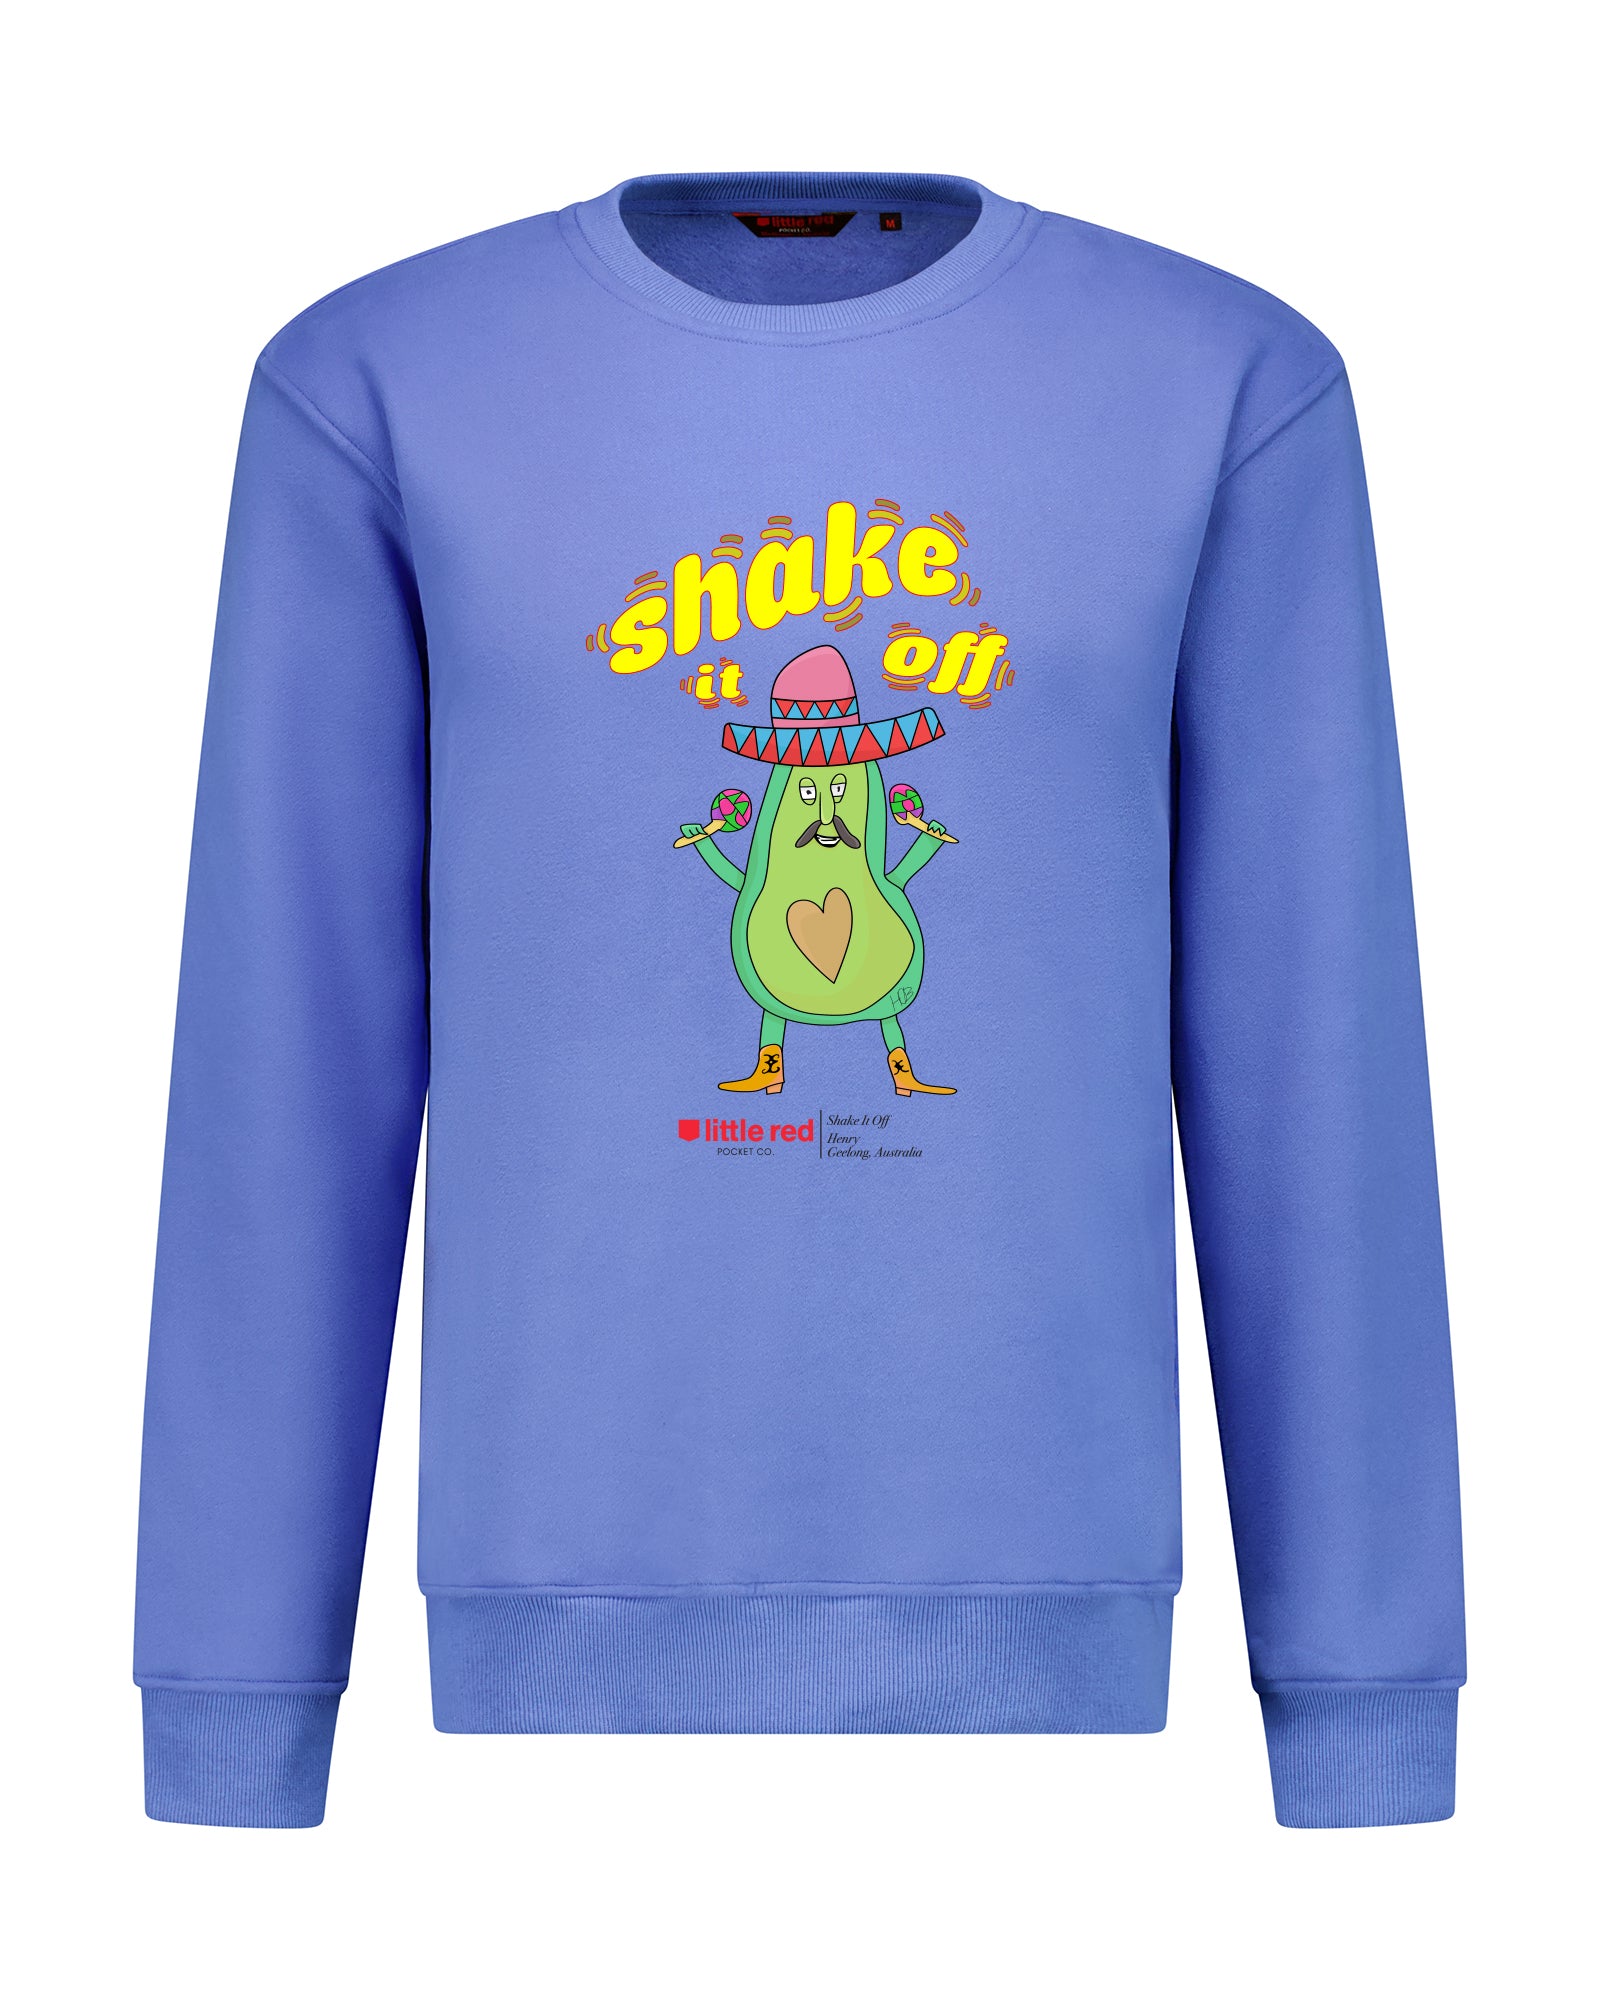 "Shake It Off" Crewneck Sweater